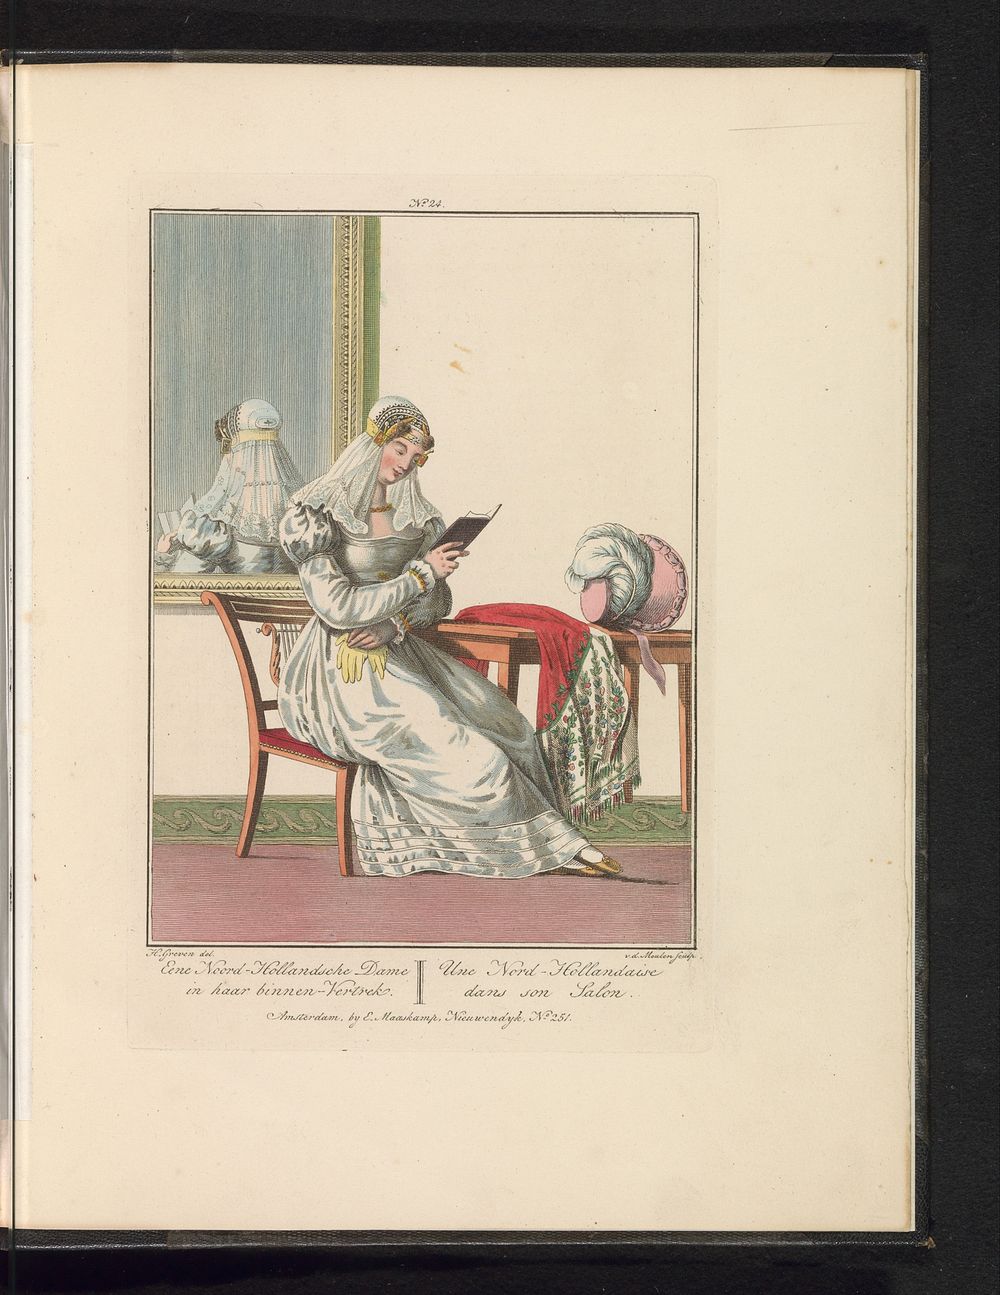 Noord-Hollandse dame (1829) by Pieter van der Meulen, Hendrik Greeven and Evert Maaskamp